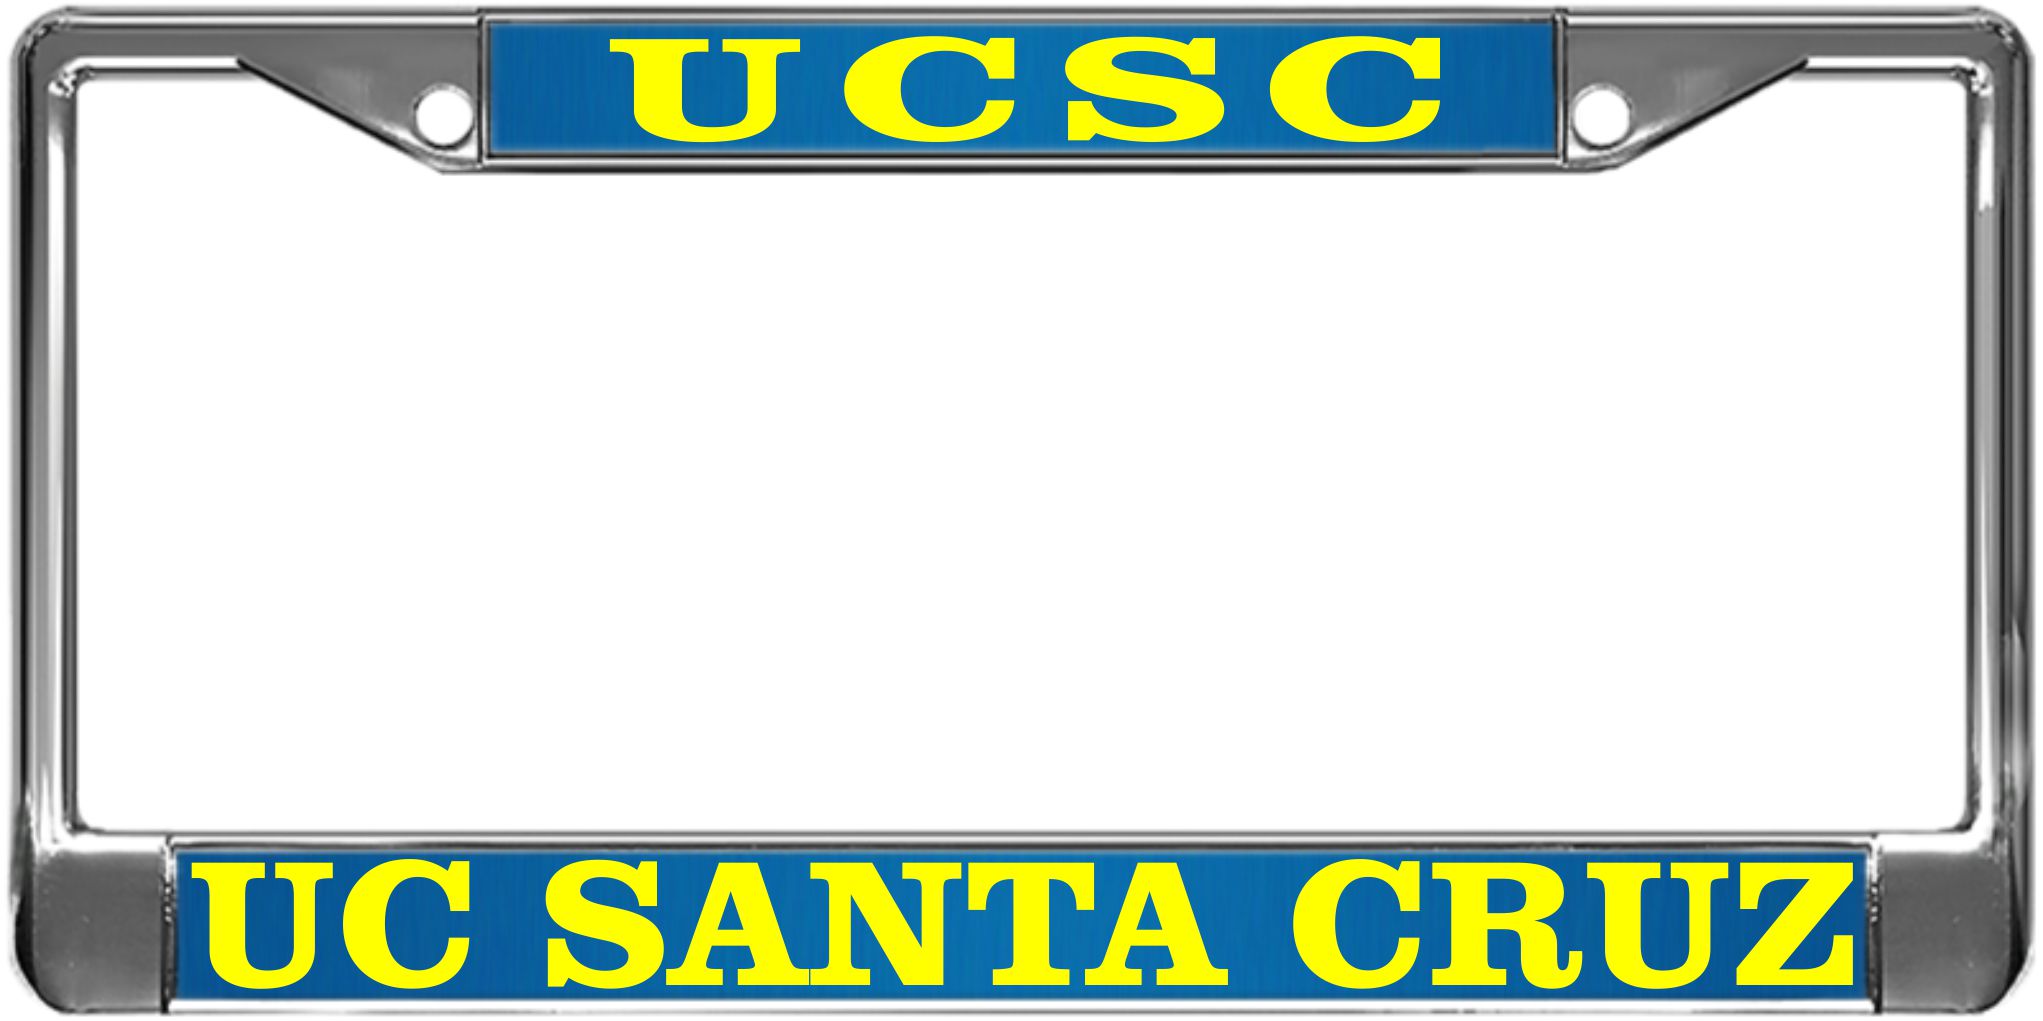 UCSC custom license plate frame